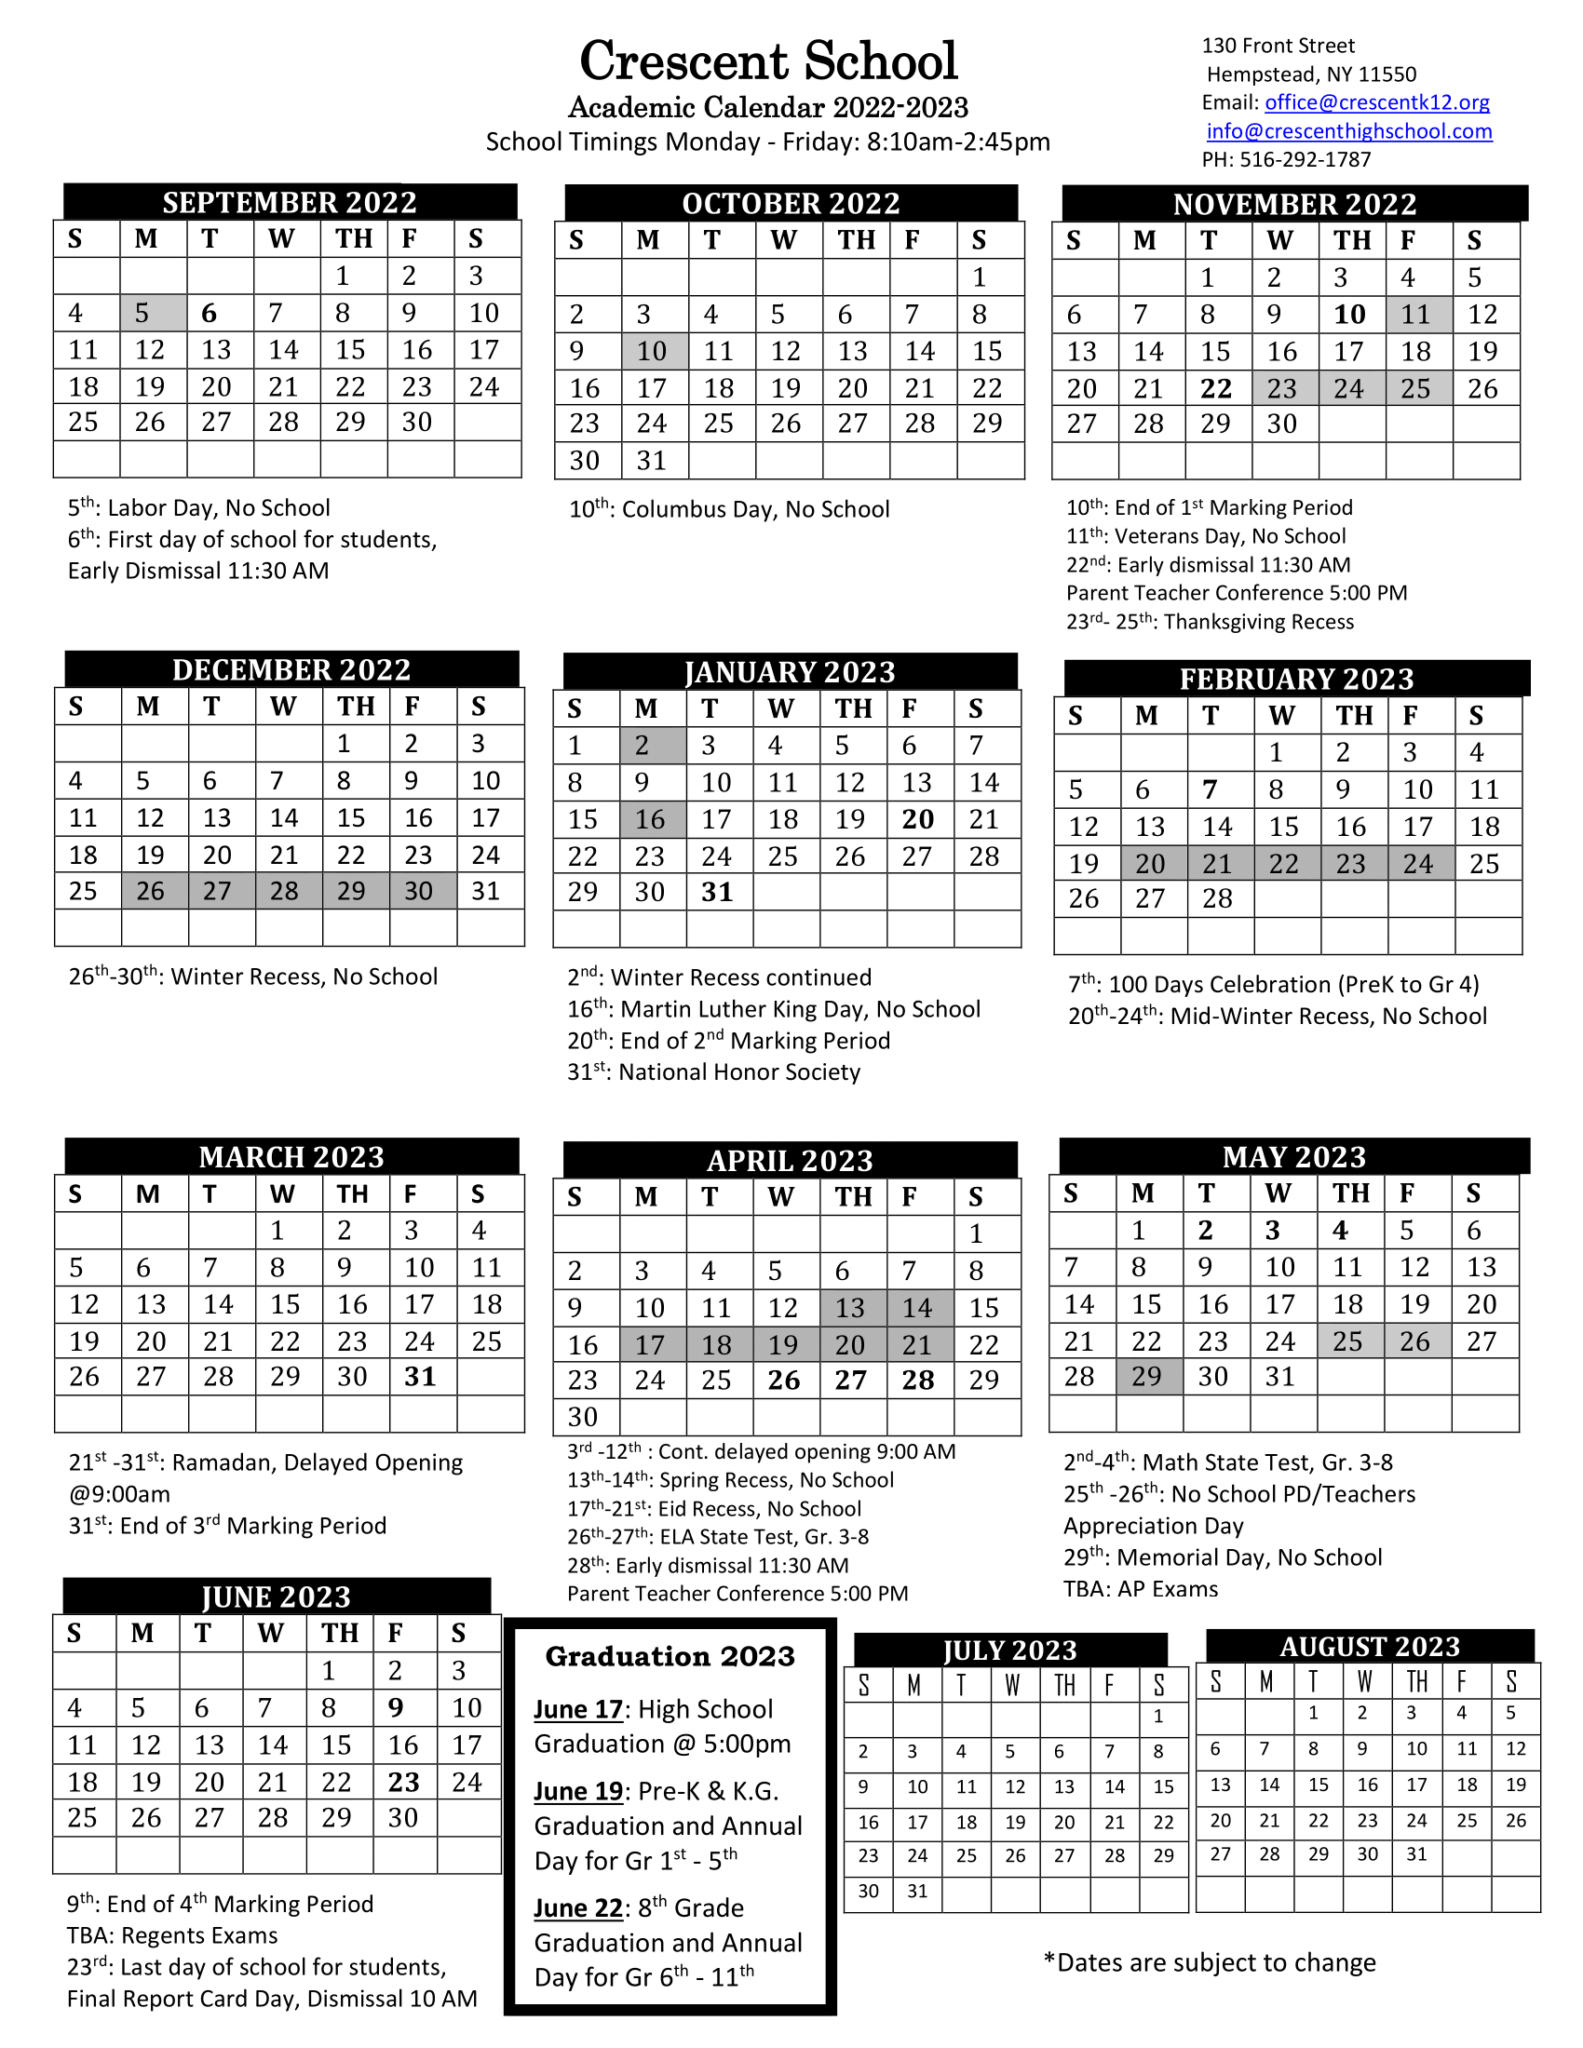 Academic Calendar – Crescent School